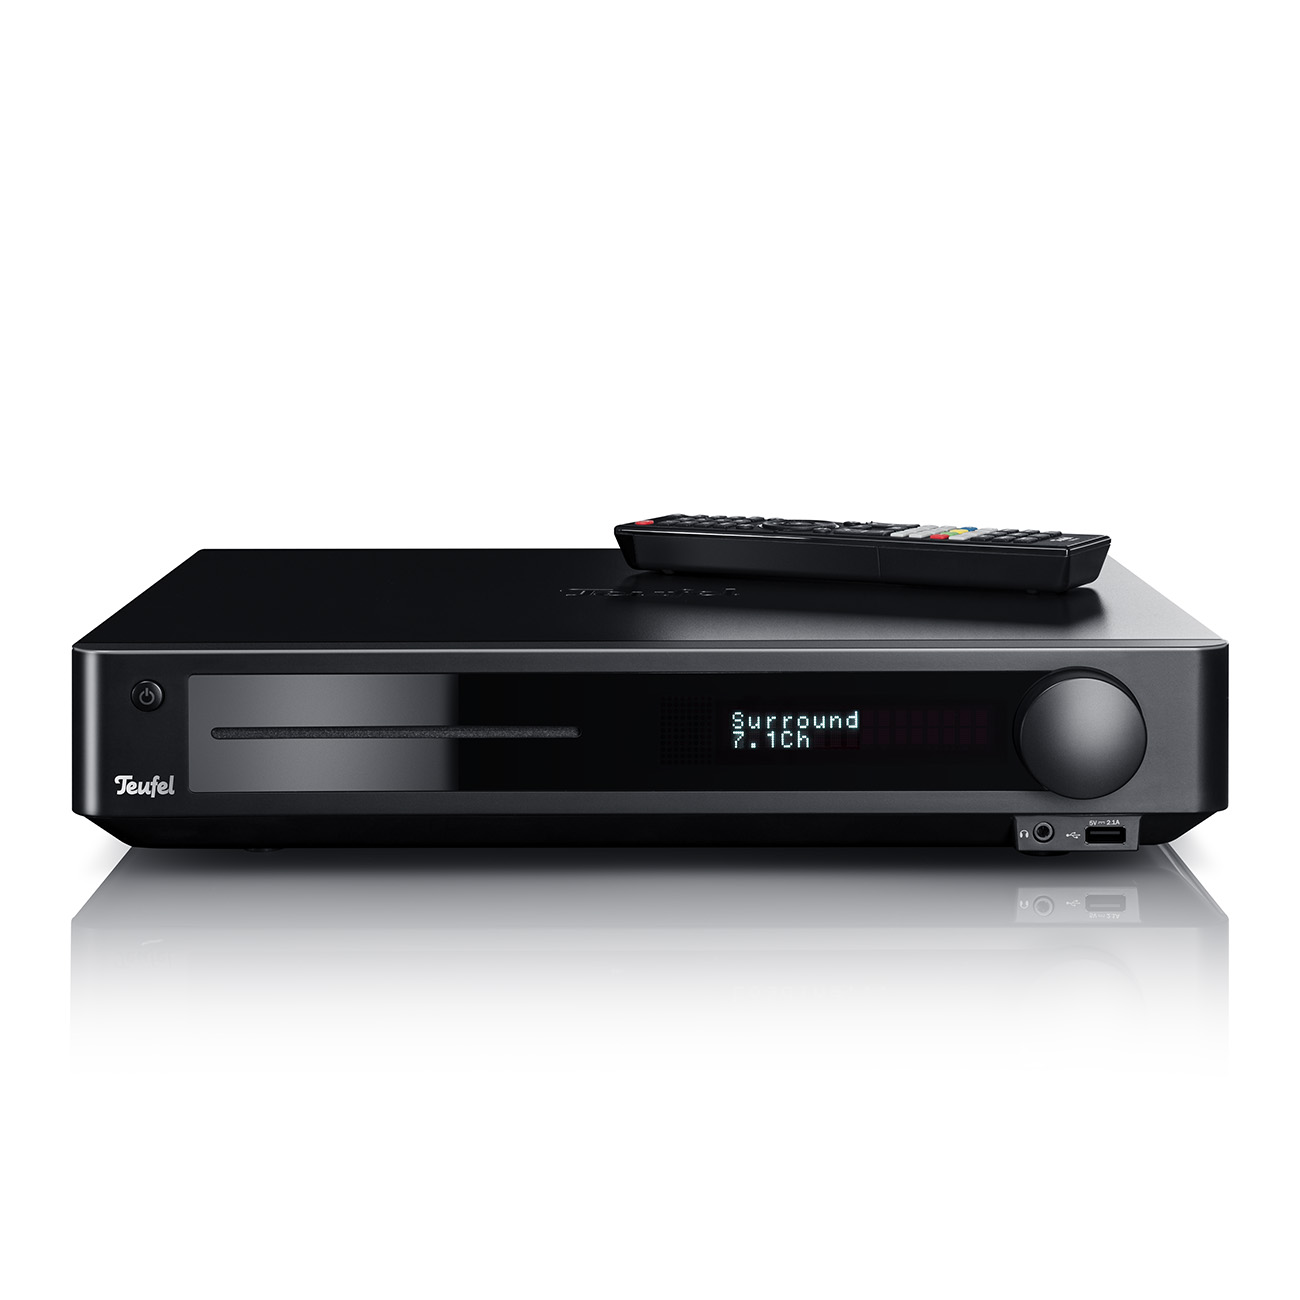 Teufel Impaq 8000 Blu-ray receiver | All-in-one 7.1 Blu-ray speler met AV-receiver, cd-speler, radio en netwerkspeler